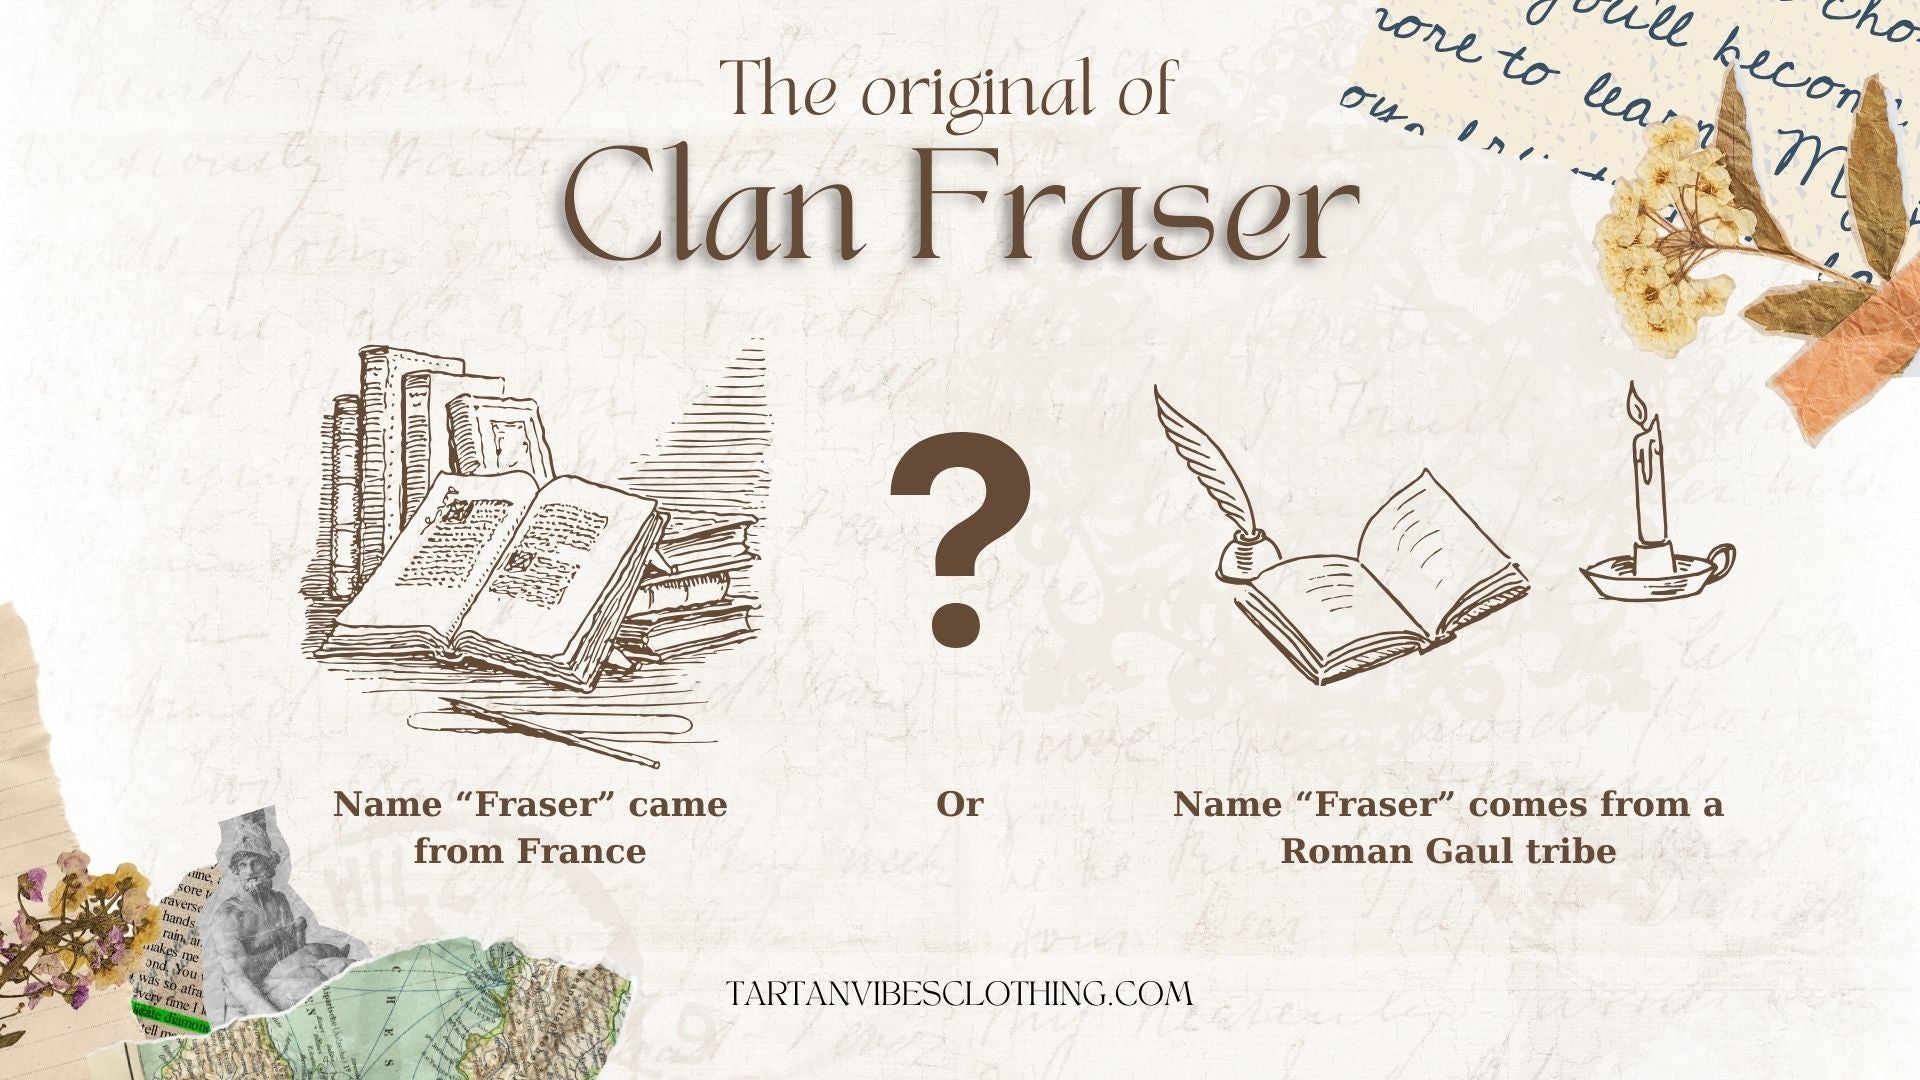 The Origin of Clan Fraser